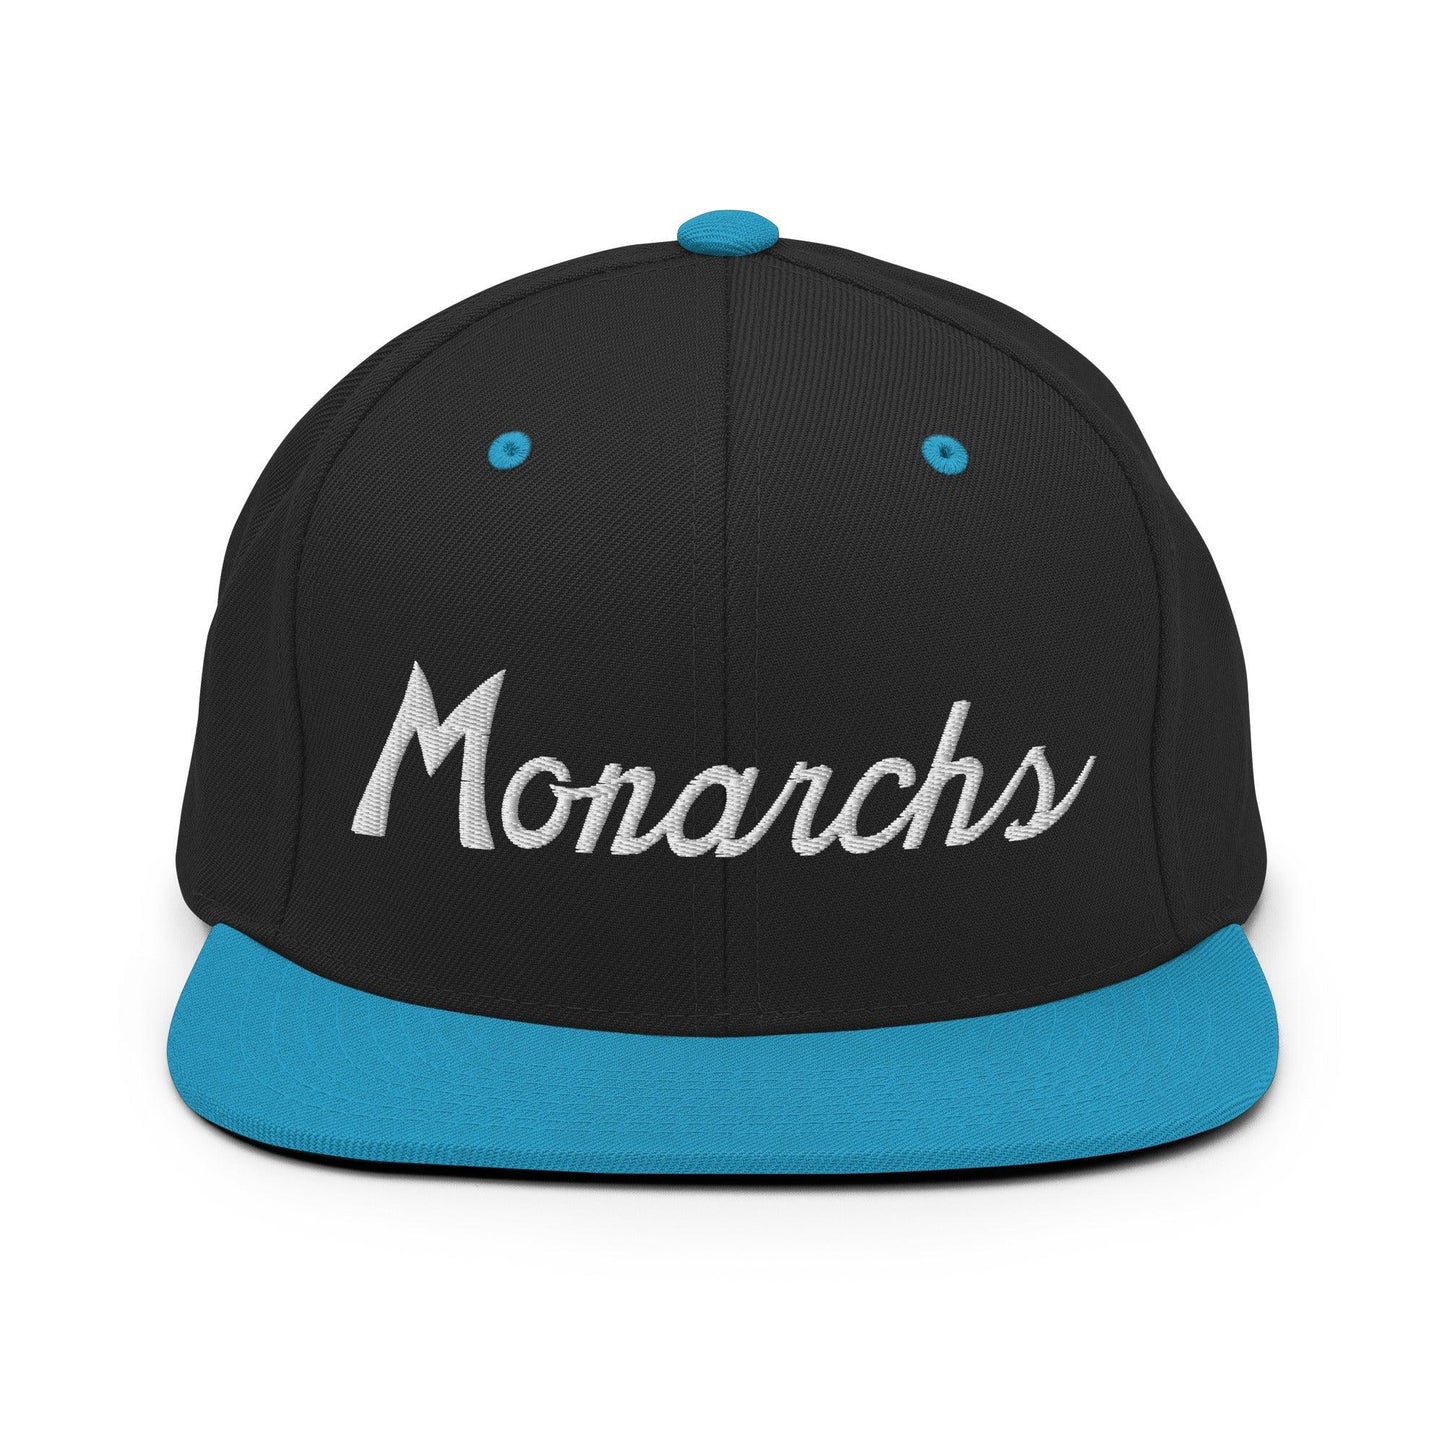 Monarchs School Mascot Script Snapback Hat Black Teal